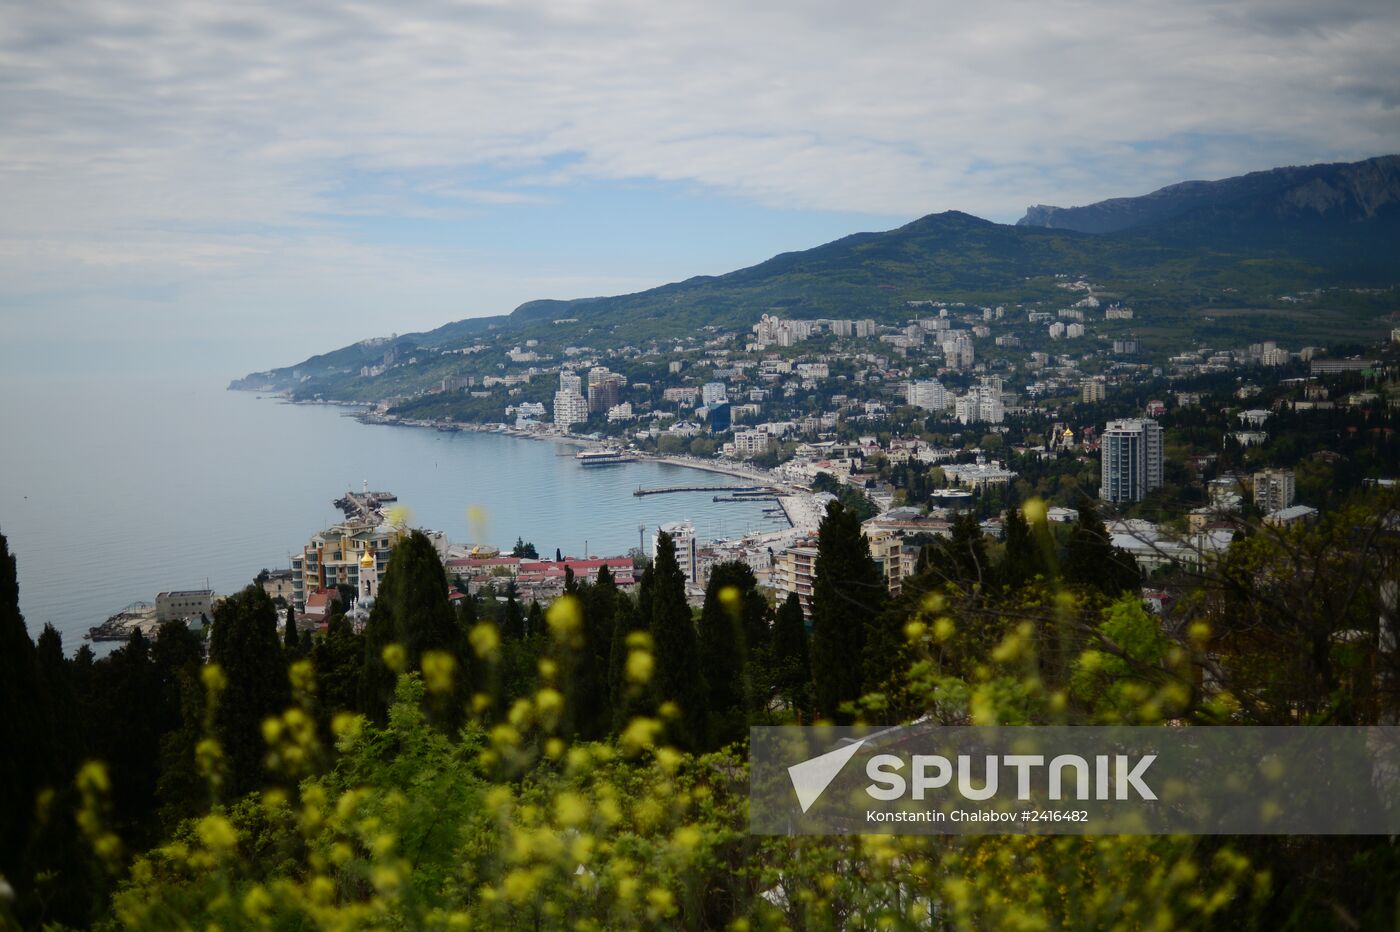 Yalta Film Studios